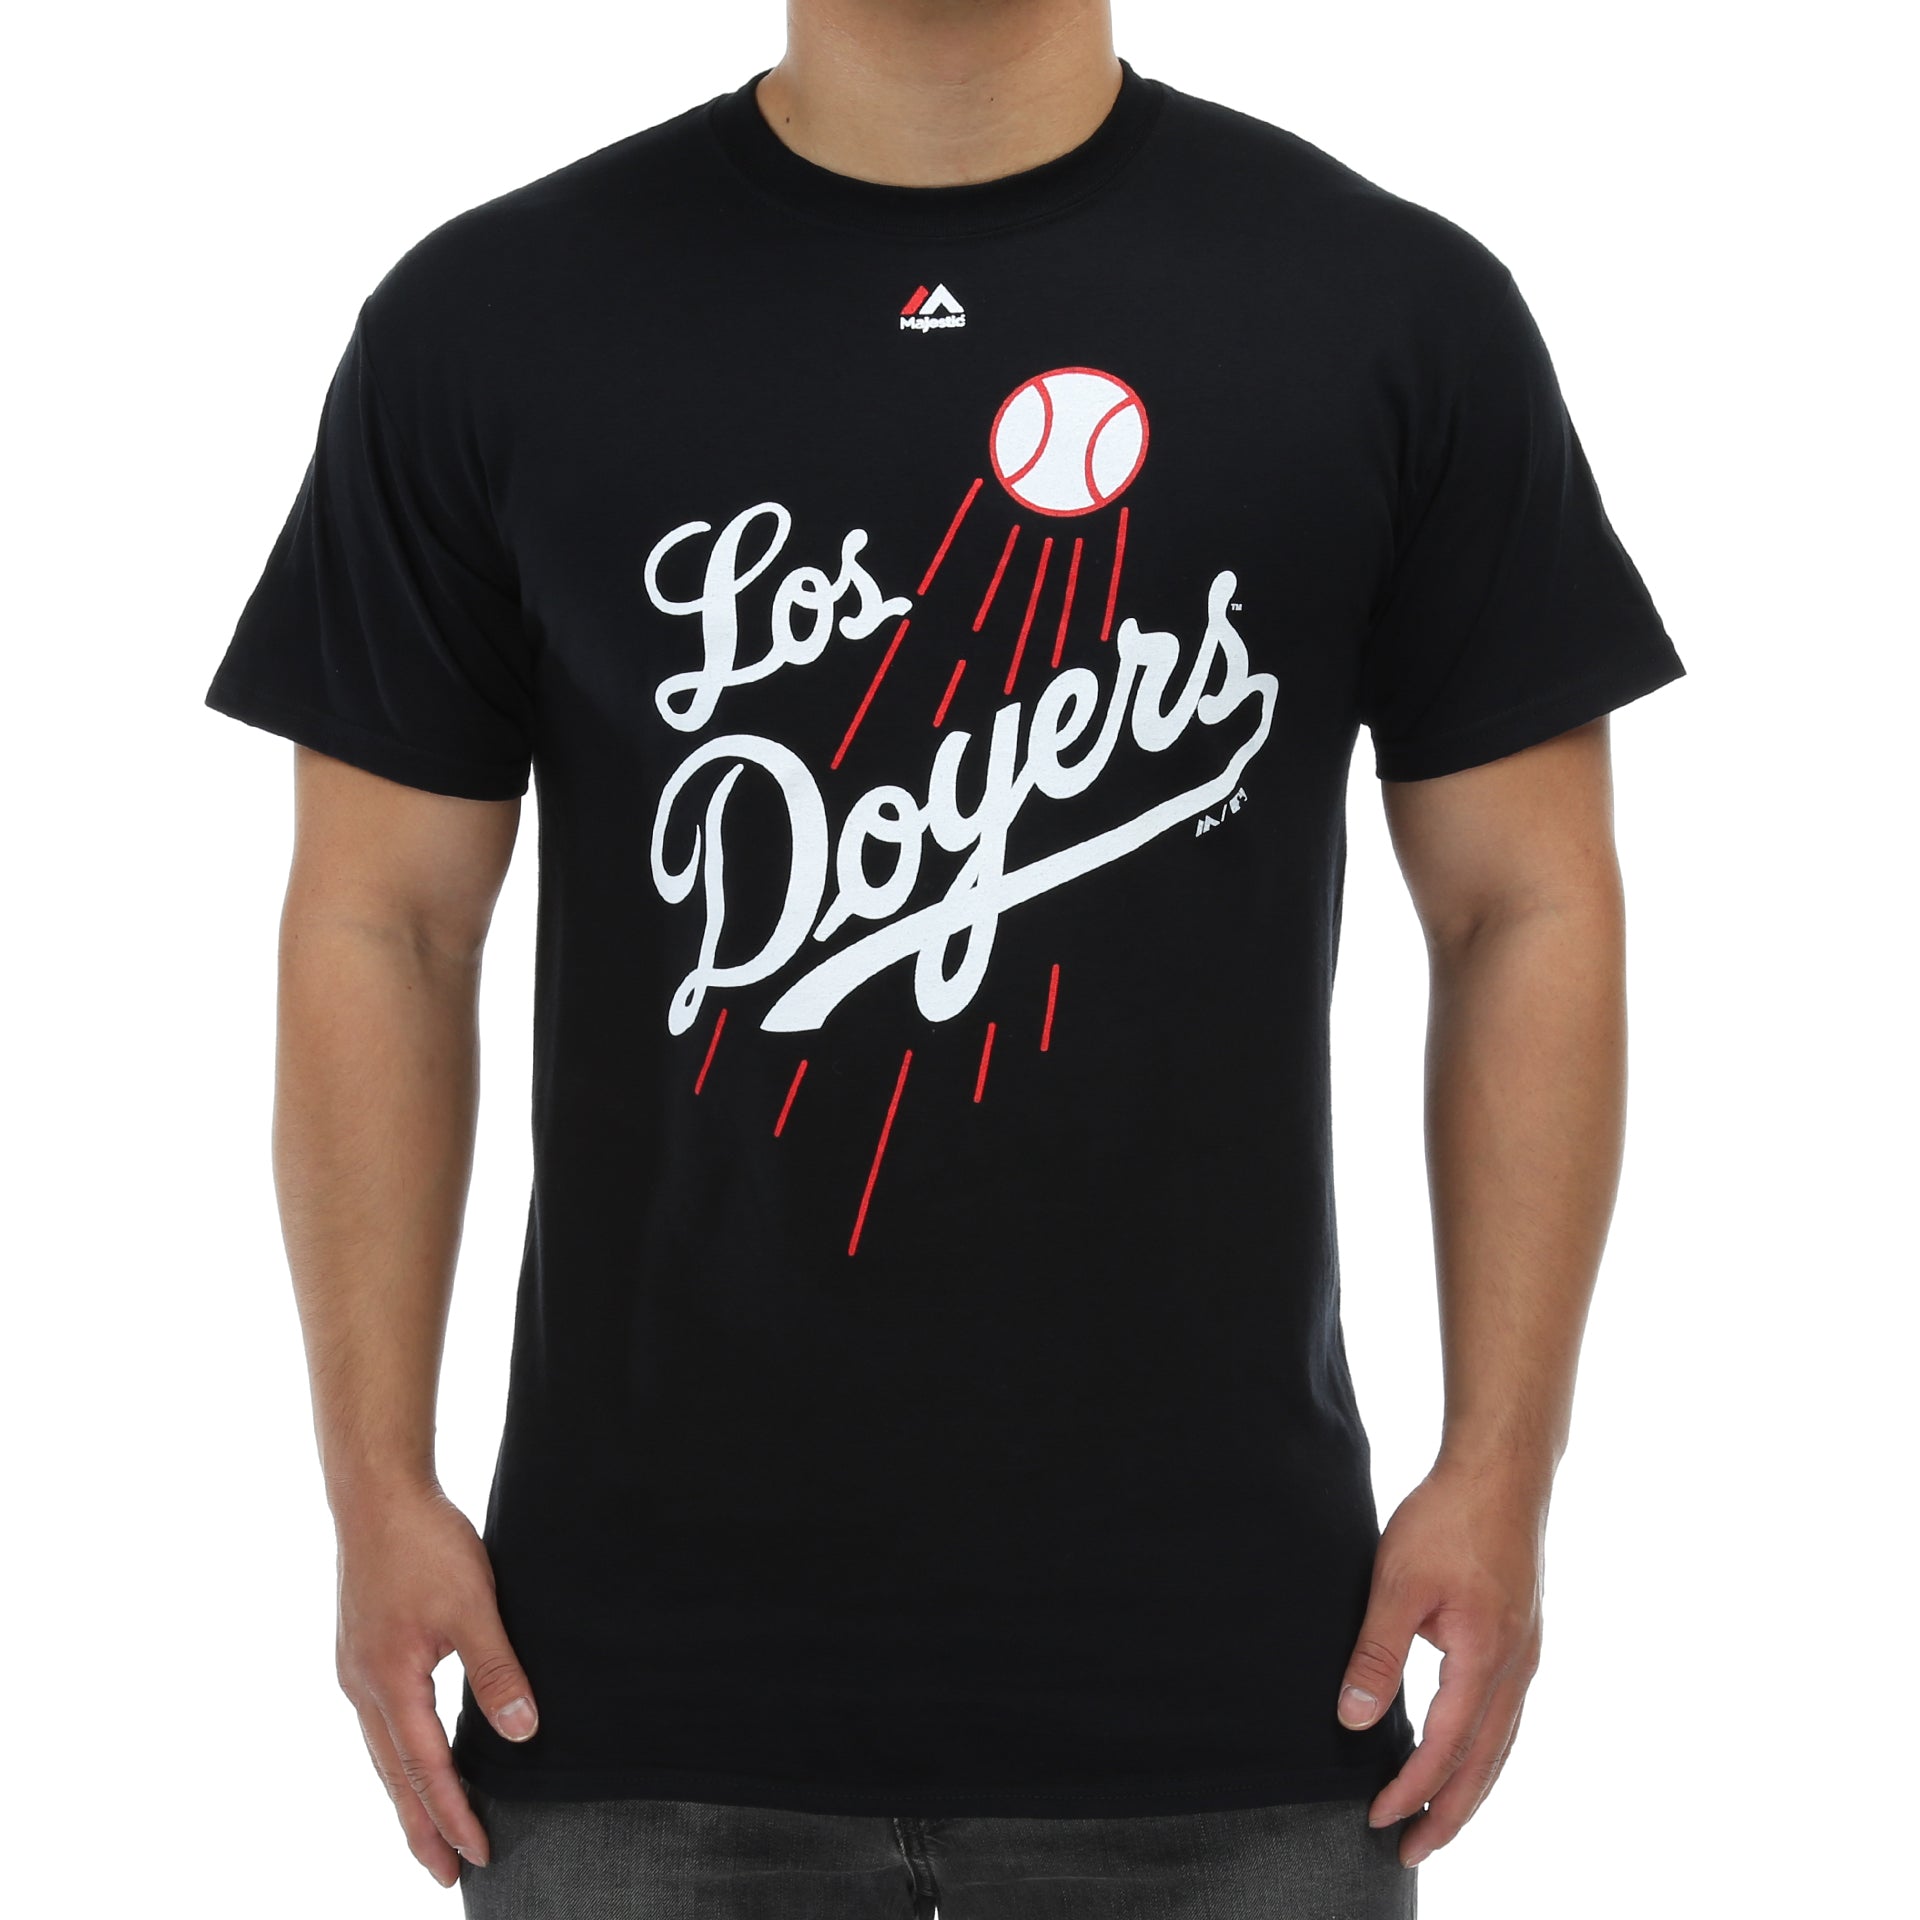 Majestic Los Angeles Dodgers Black Baseball Jersey